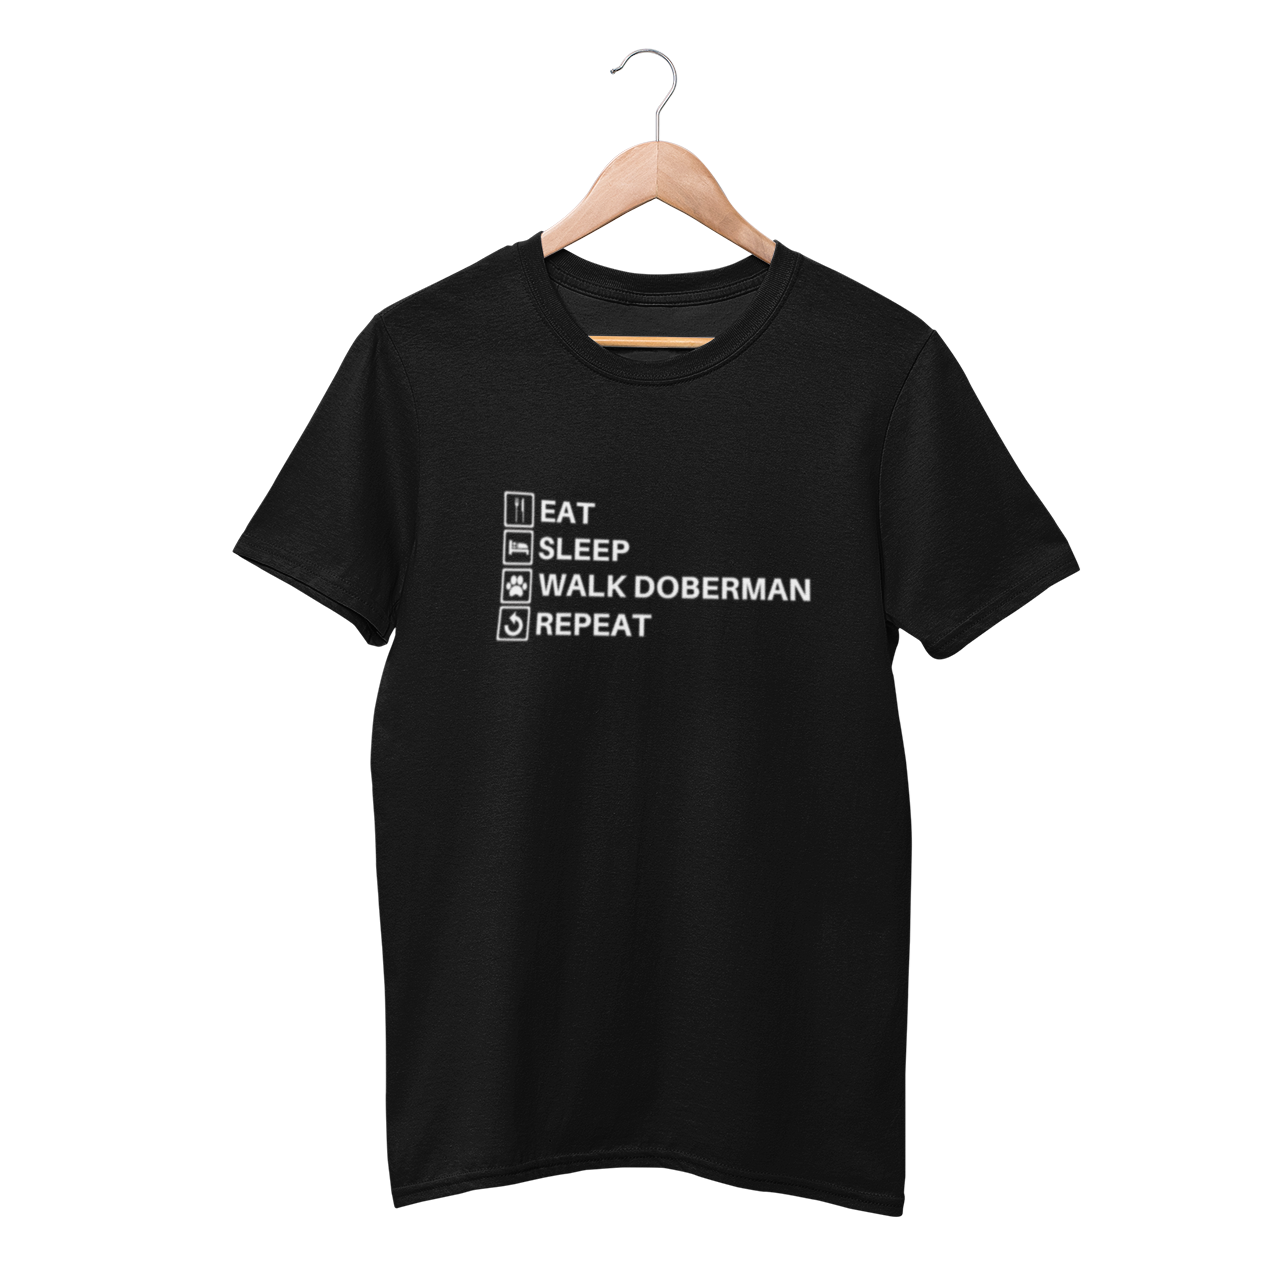 Eat, Sleep, Walk Doberman & Repeat Shirt - Funny Labrador Cute Shirt Labradors Labs